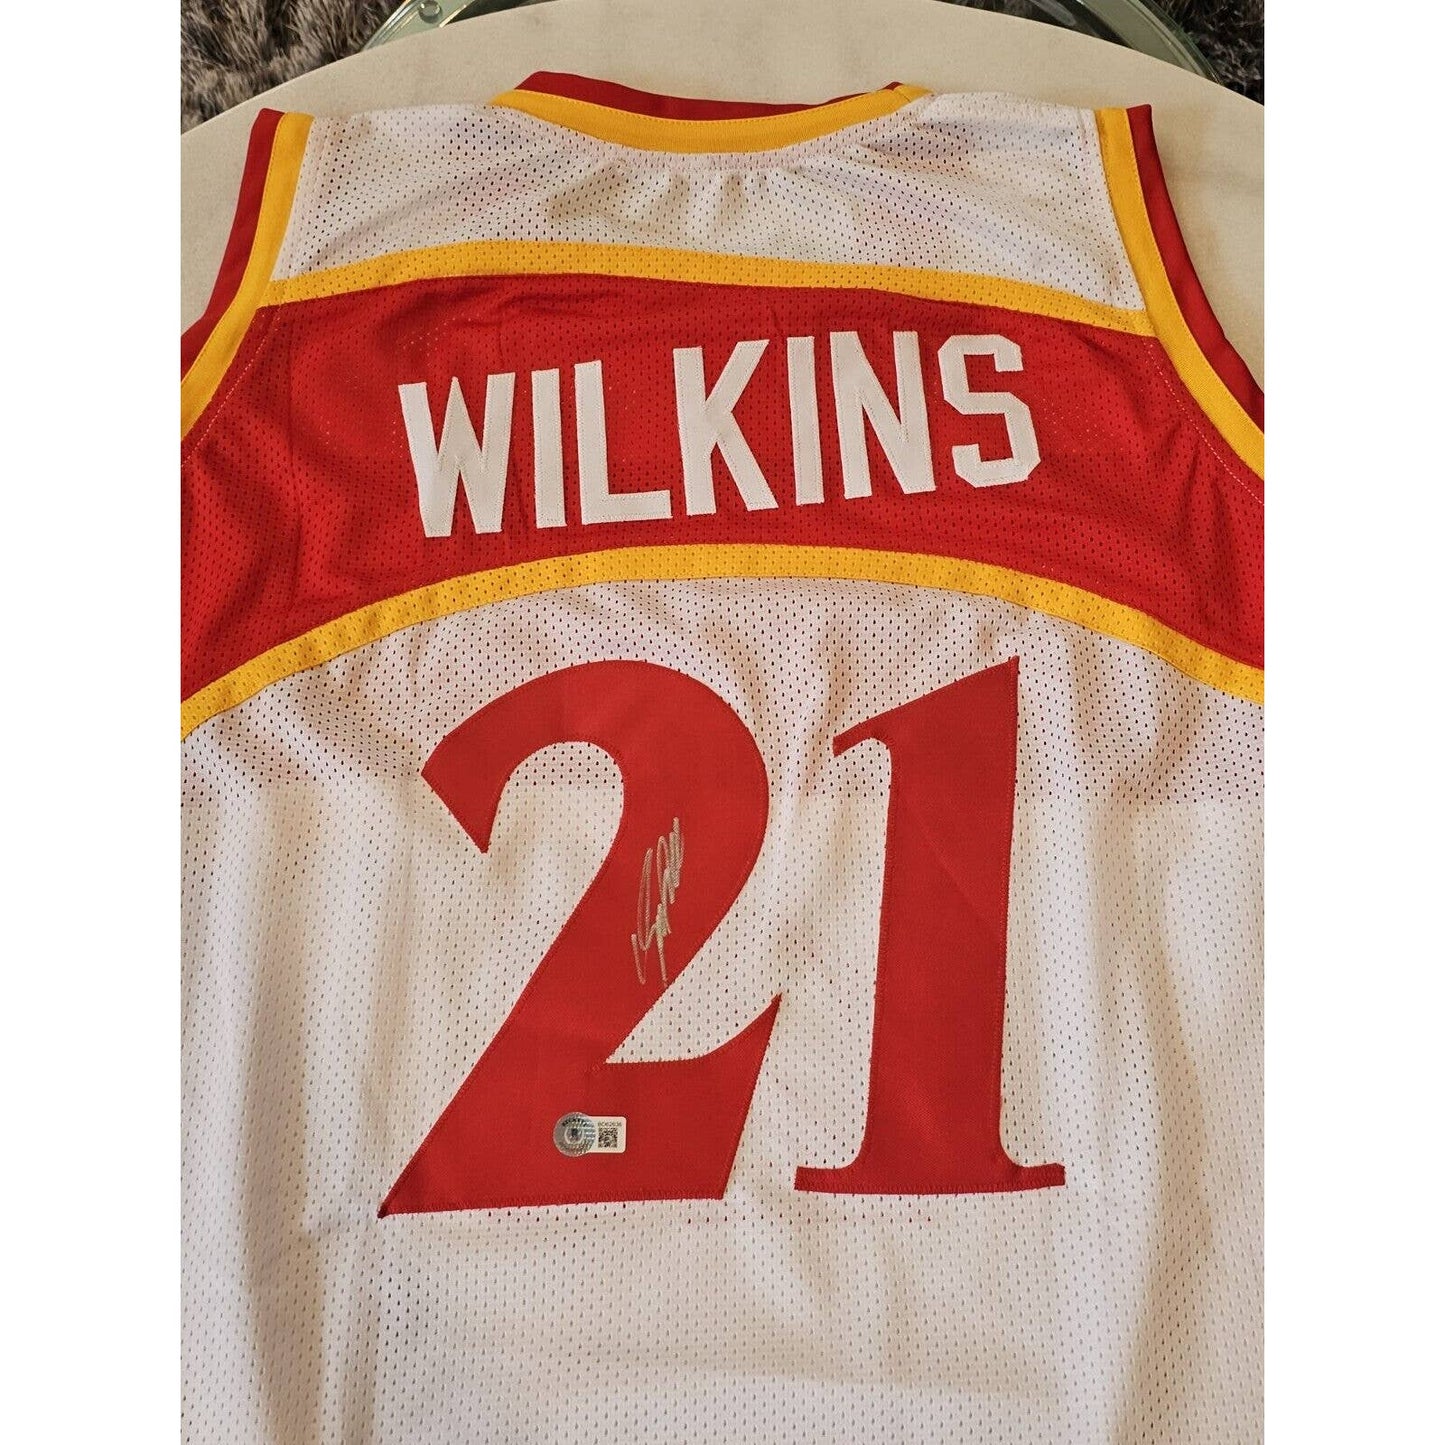 Dominique Wilkins Autographed/Signed Jersey Beckett Atlanta Hawks